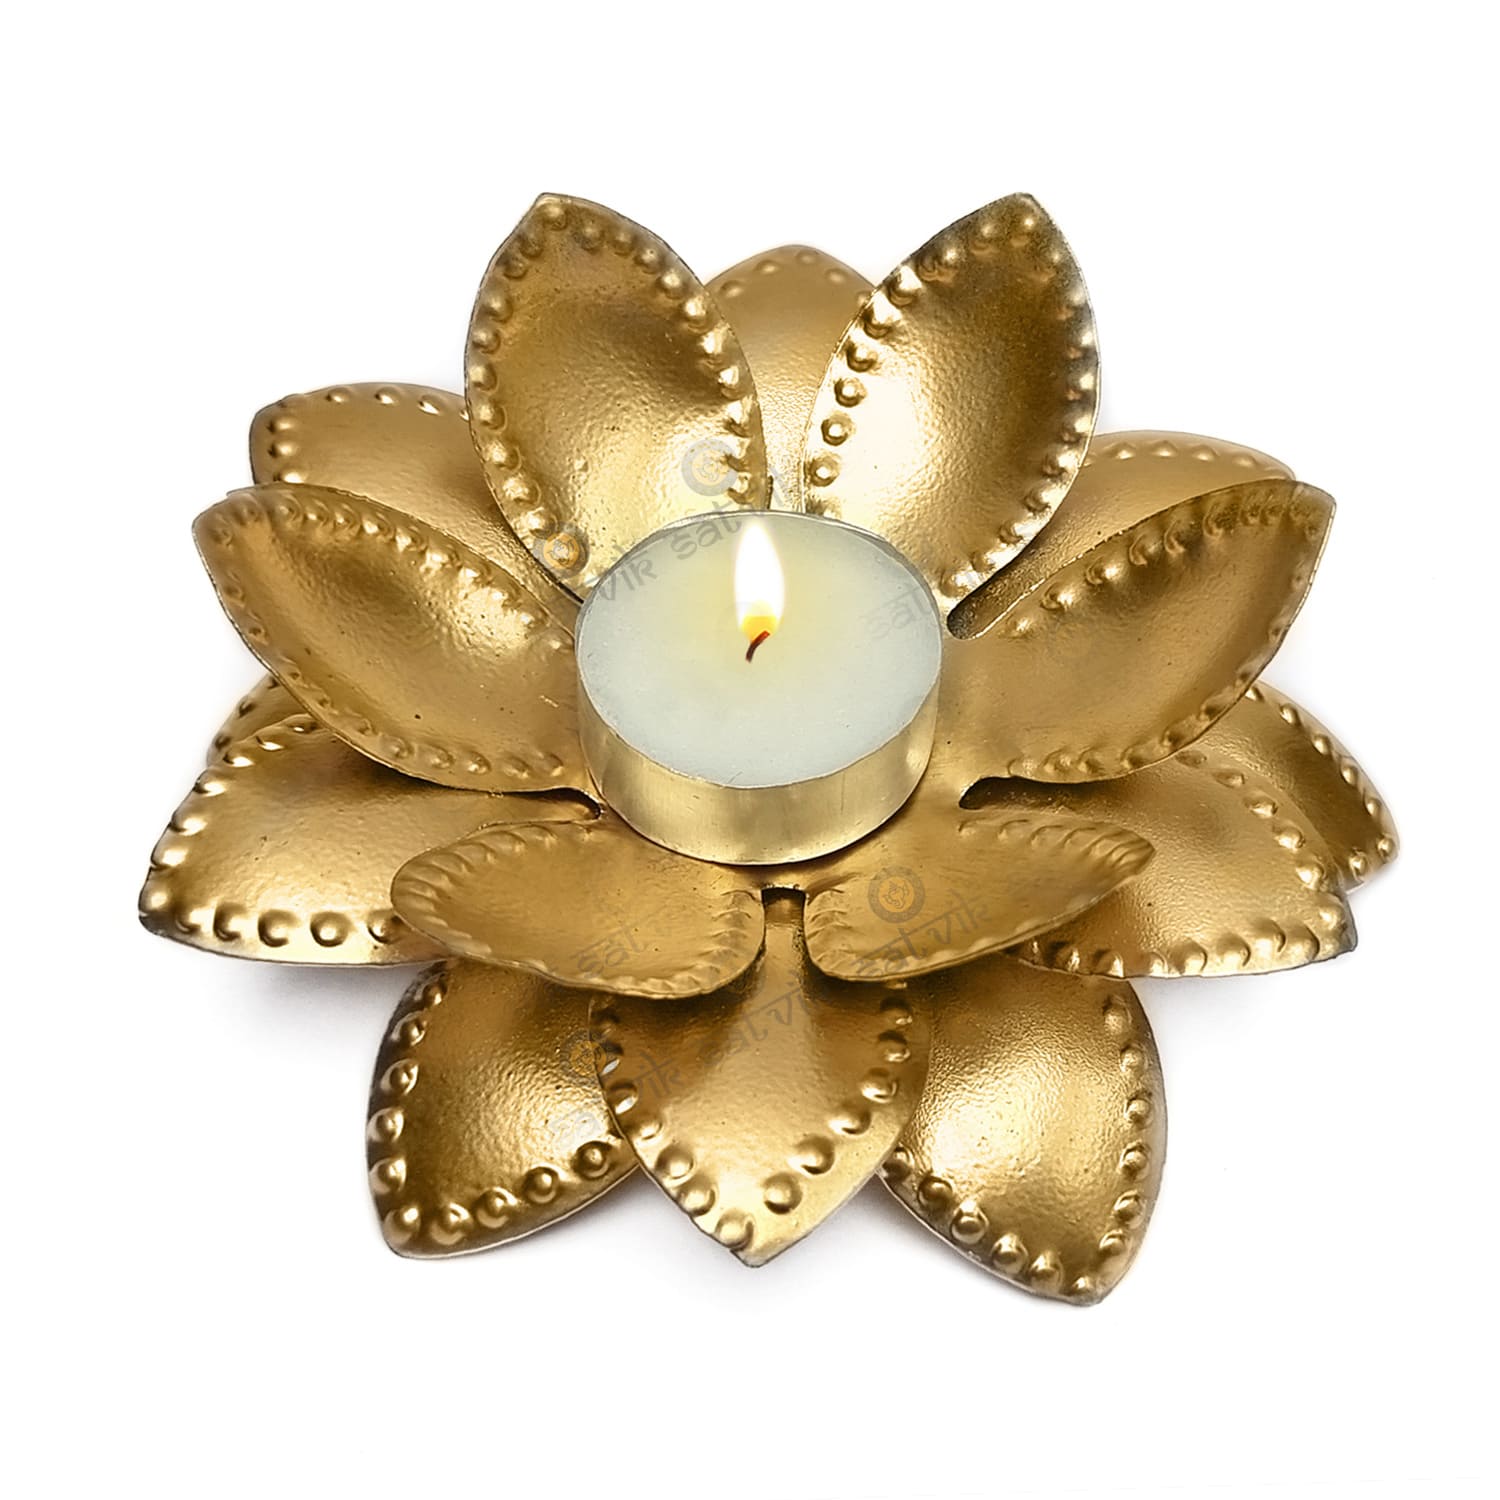 3 Step (petals) lotus Metal Tea Light Holder